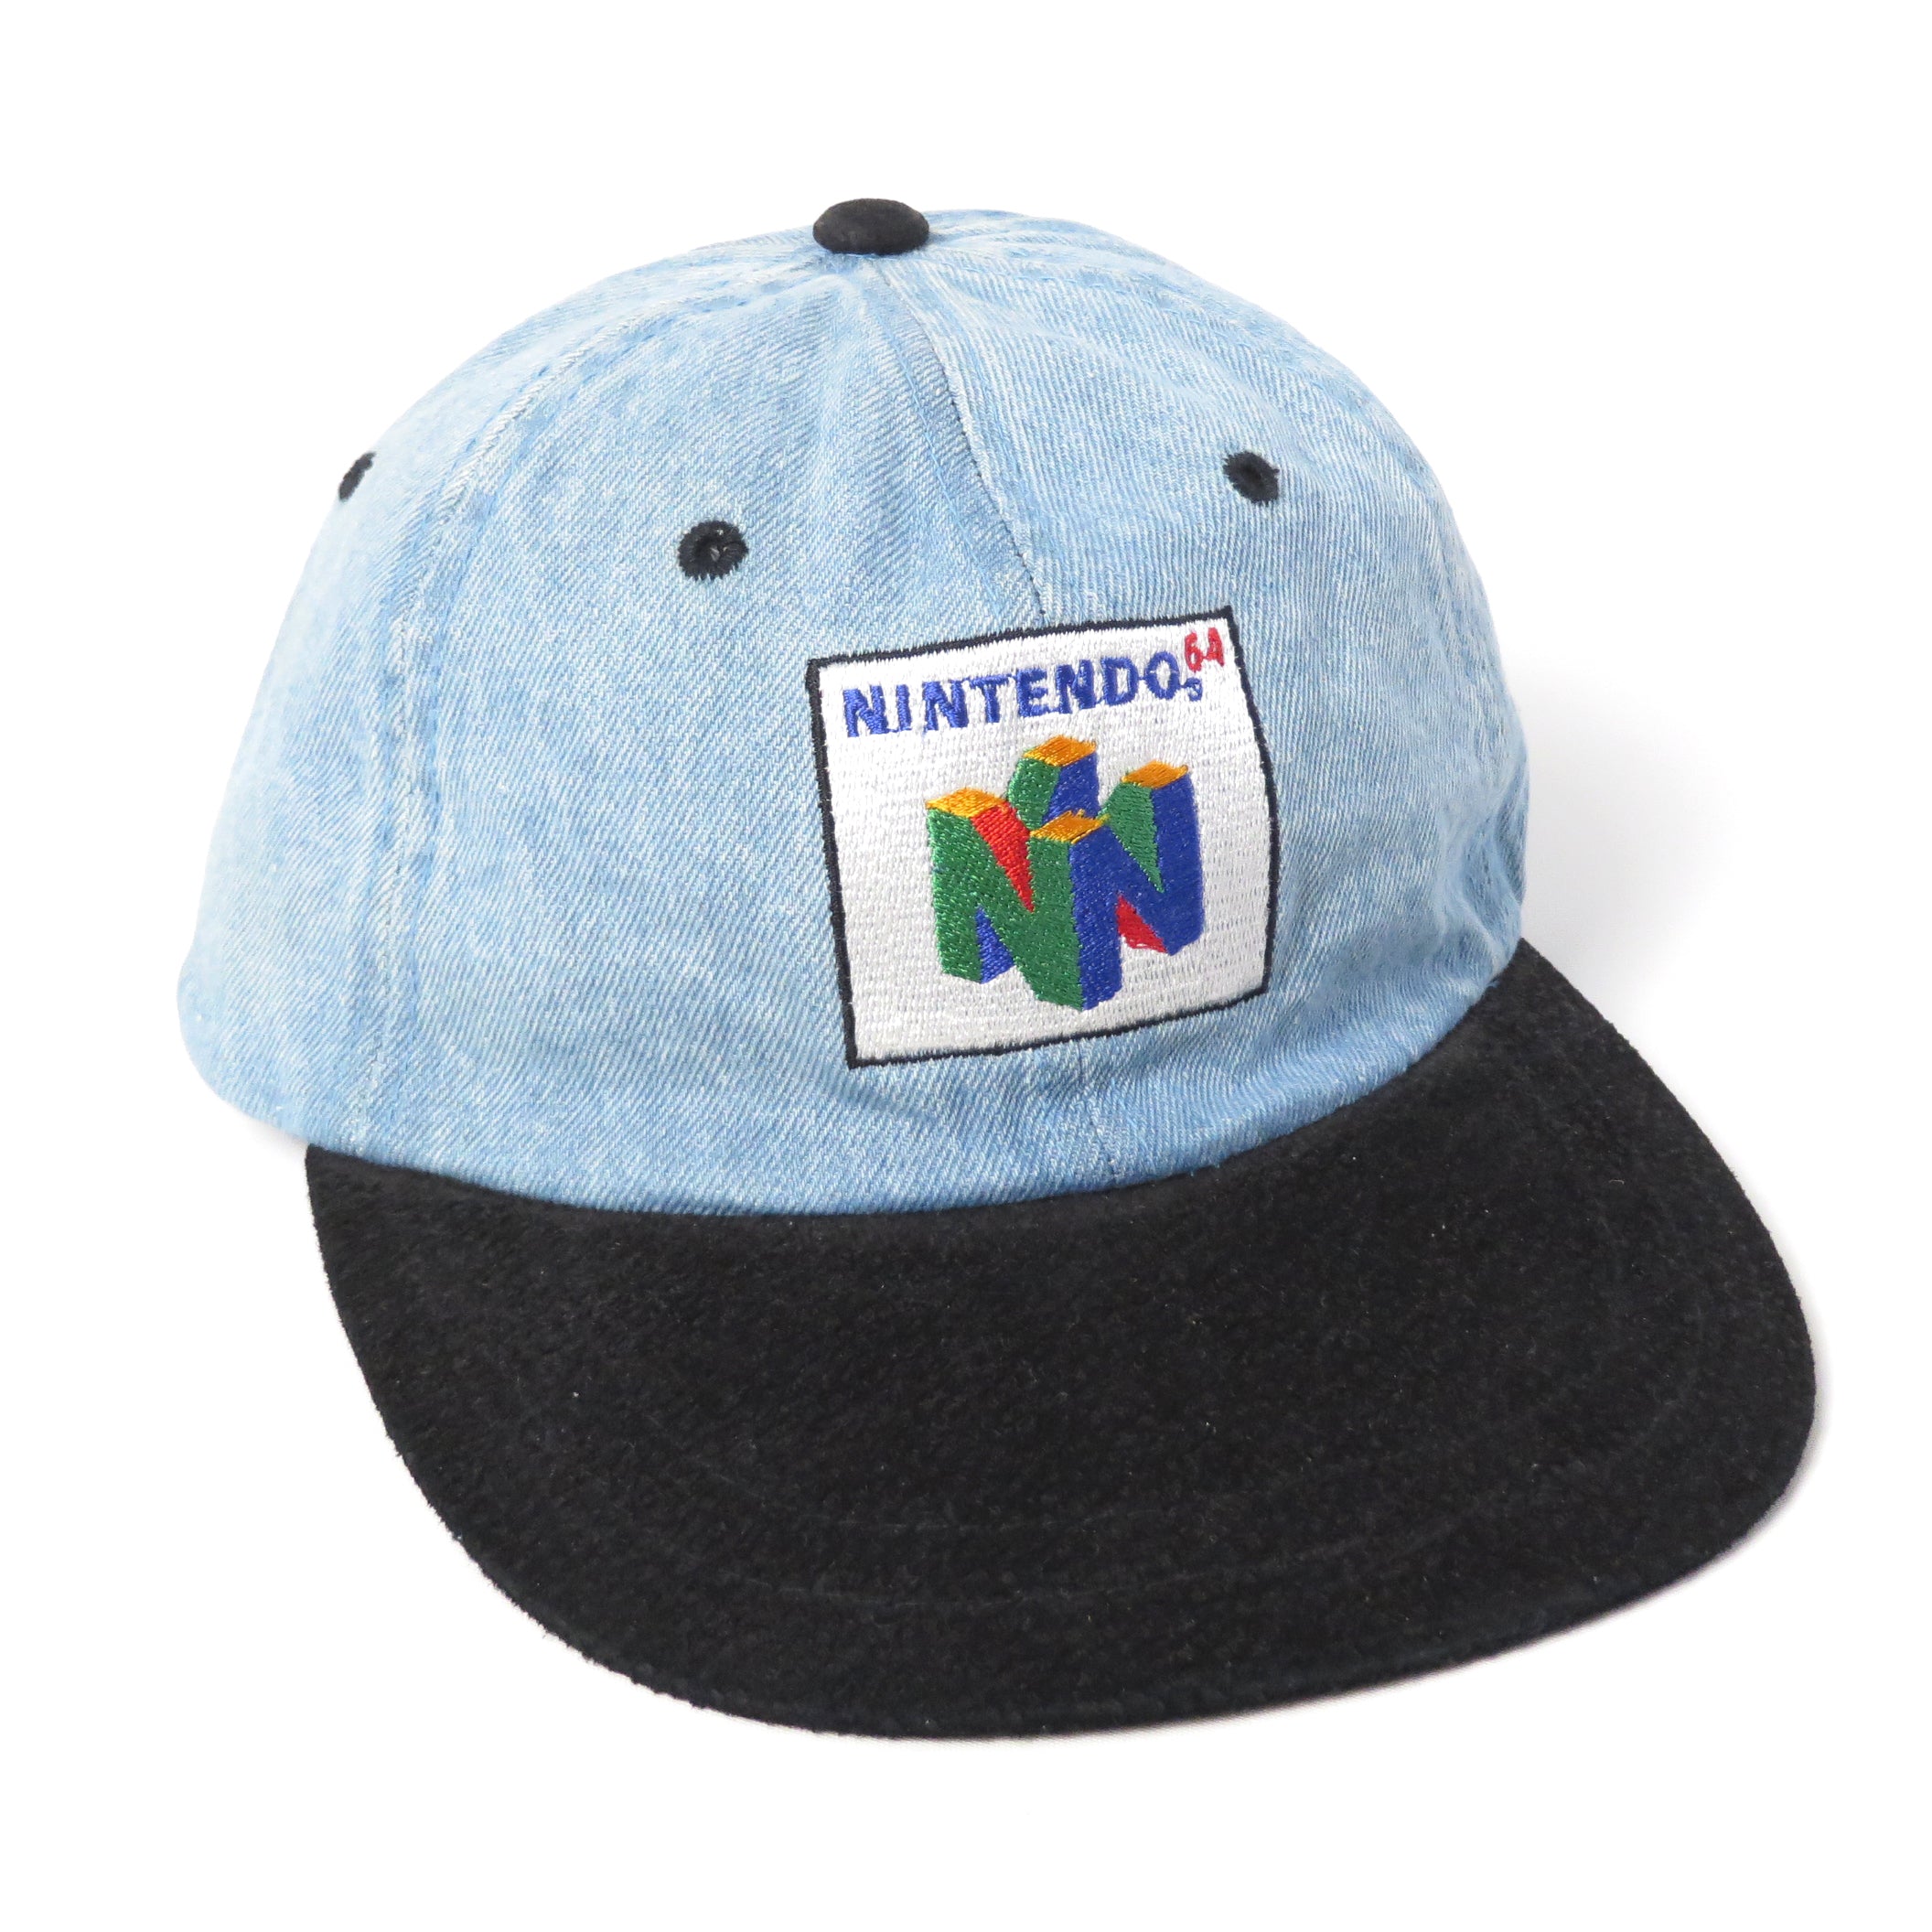 Vintage Nintendo 64 Denim Strapback Hat